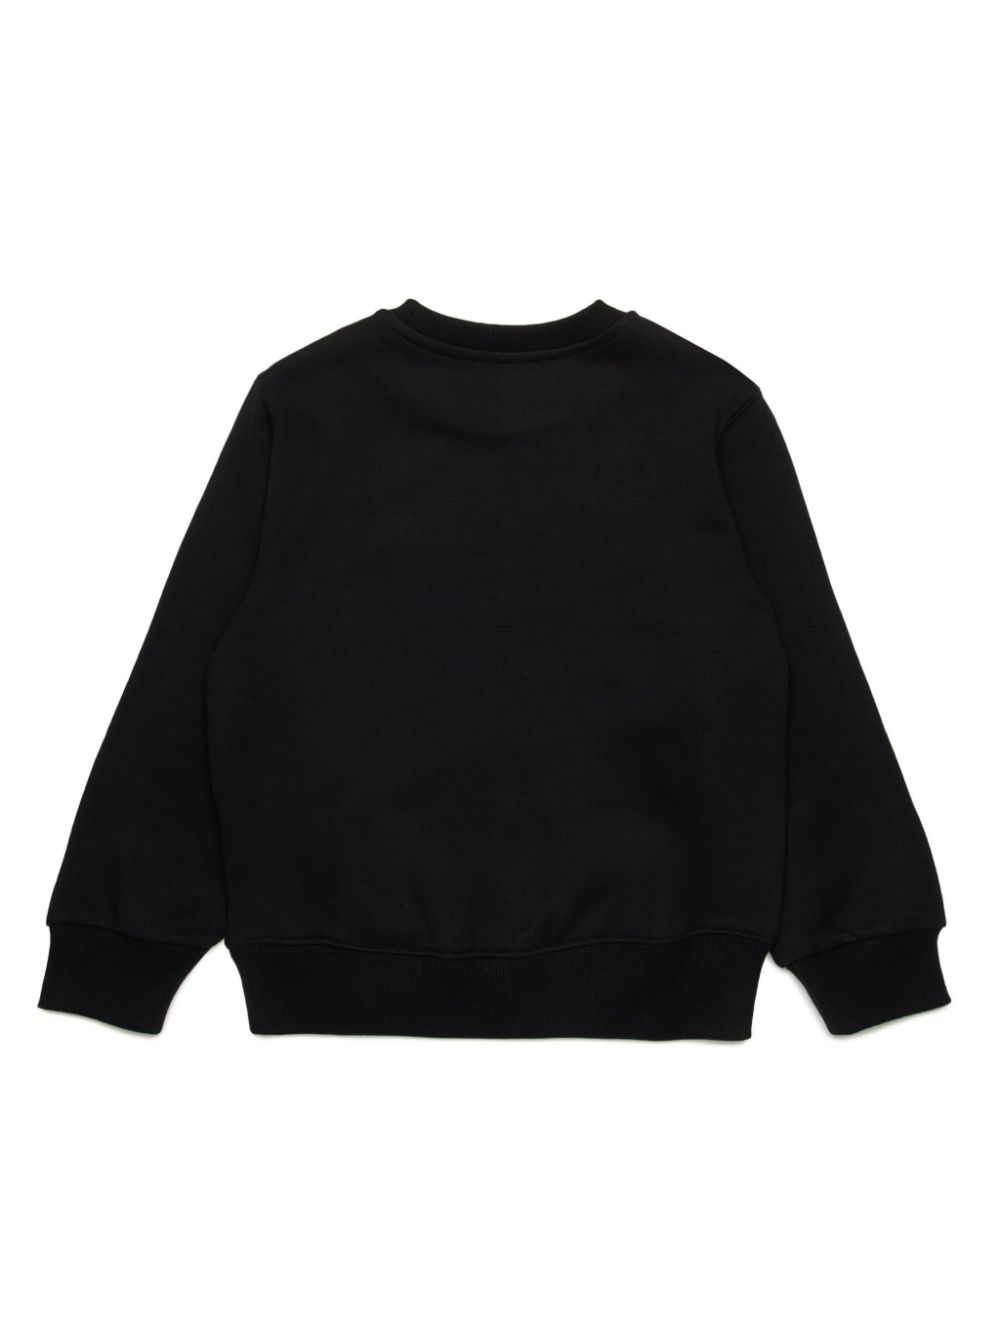 Black cotton sweatshirt for boys